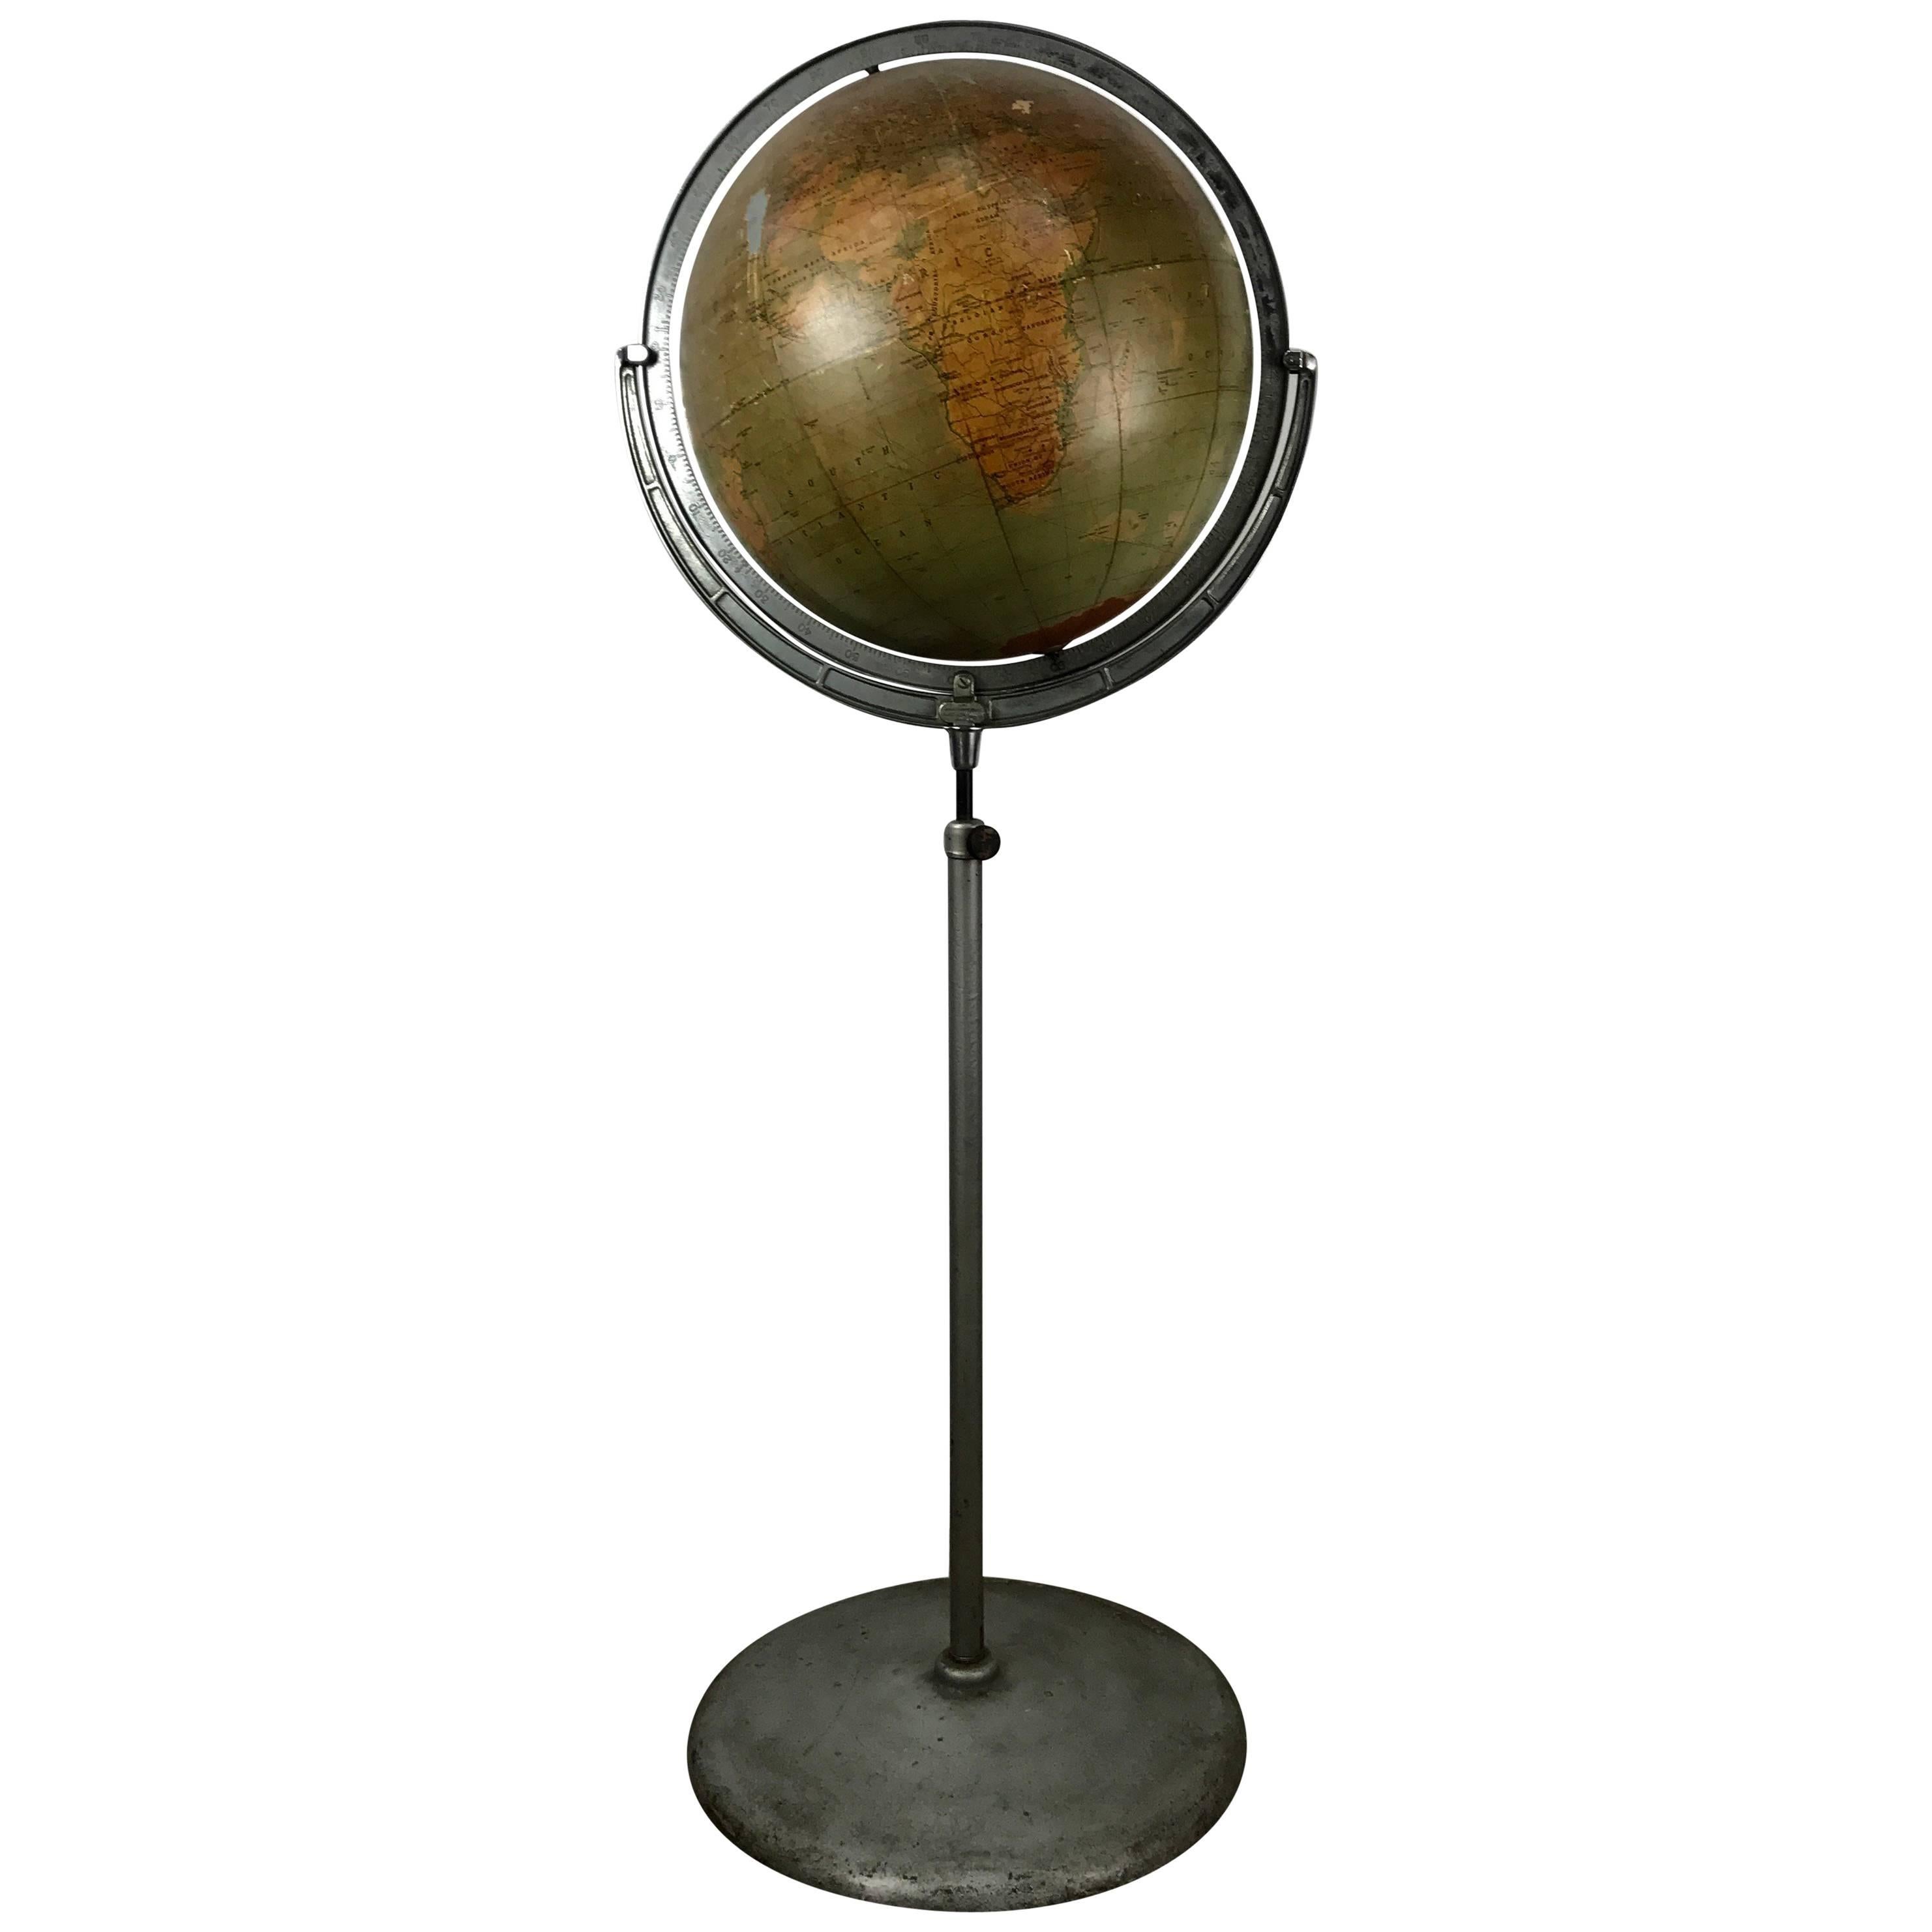 Telescoping Adjustable World Globe by Rand McNally, Chicago